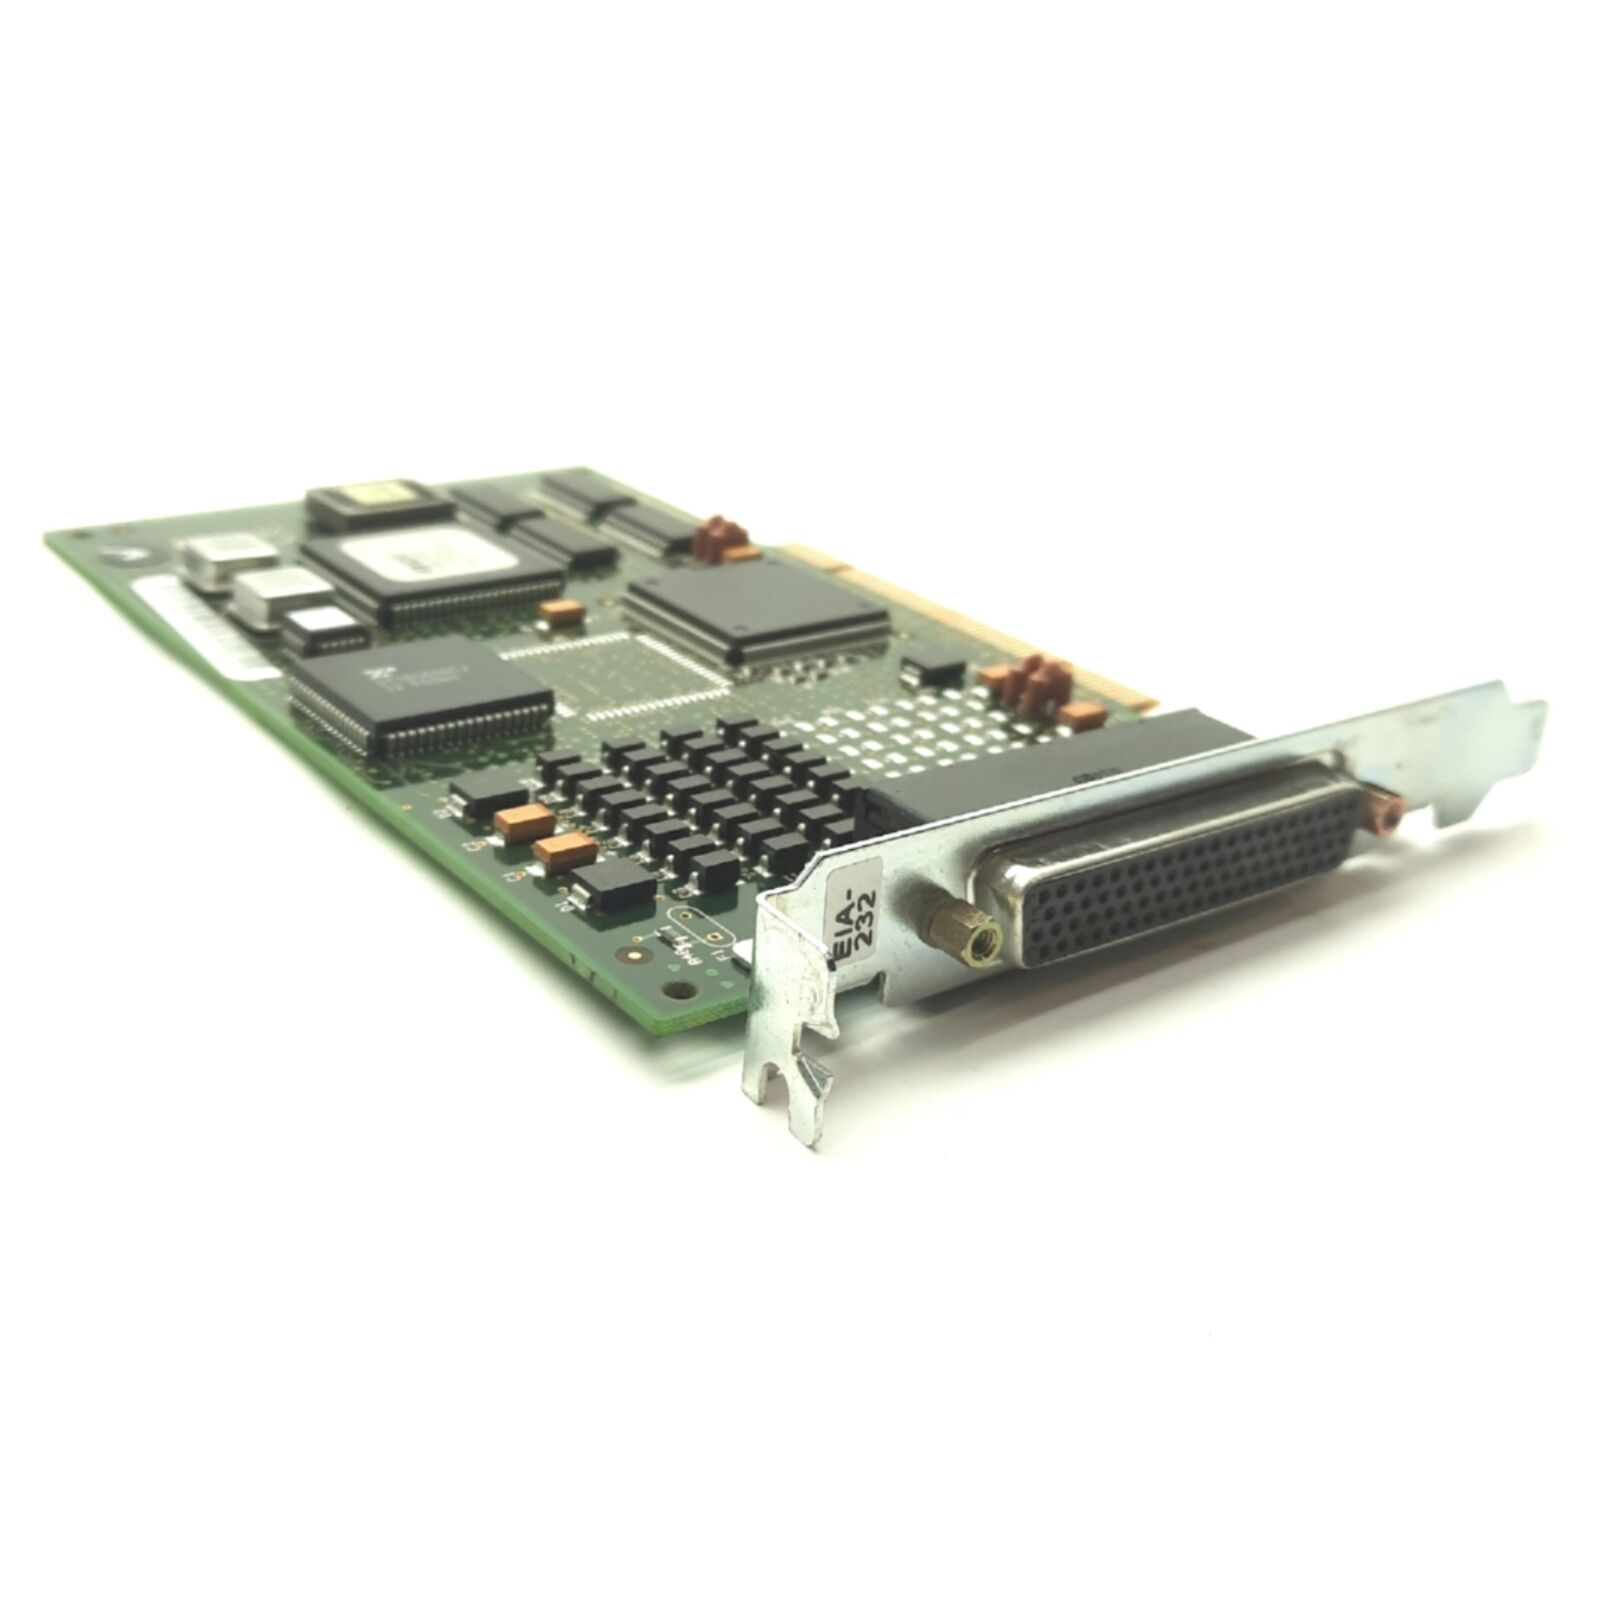 DIGI AccelePort 4r 920 Serial Communication Board/Card, PCI, 4-Port, EIA-232